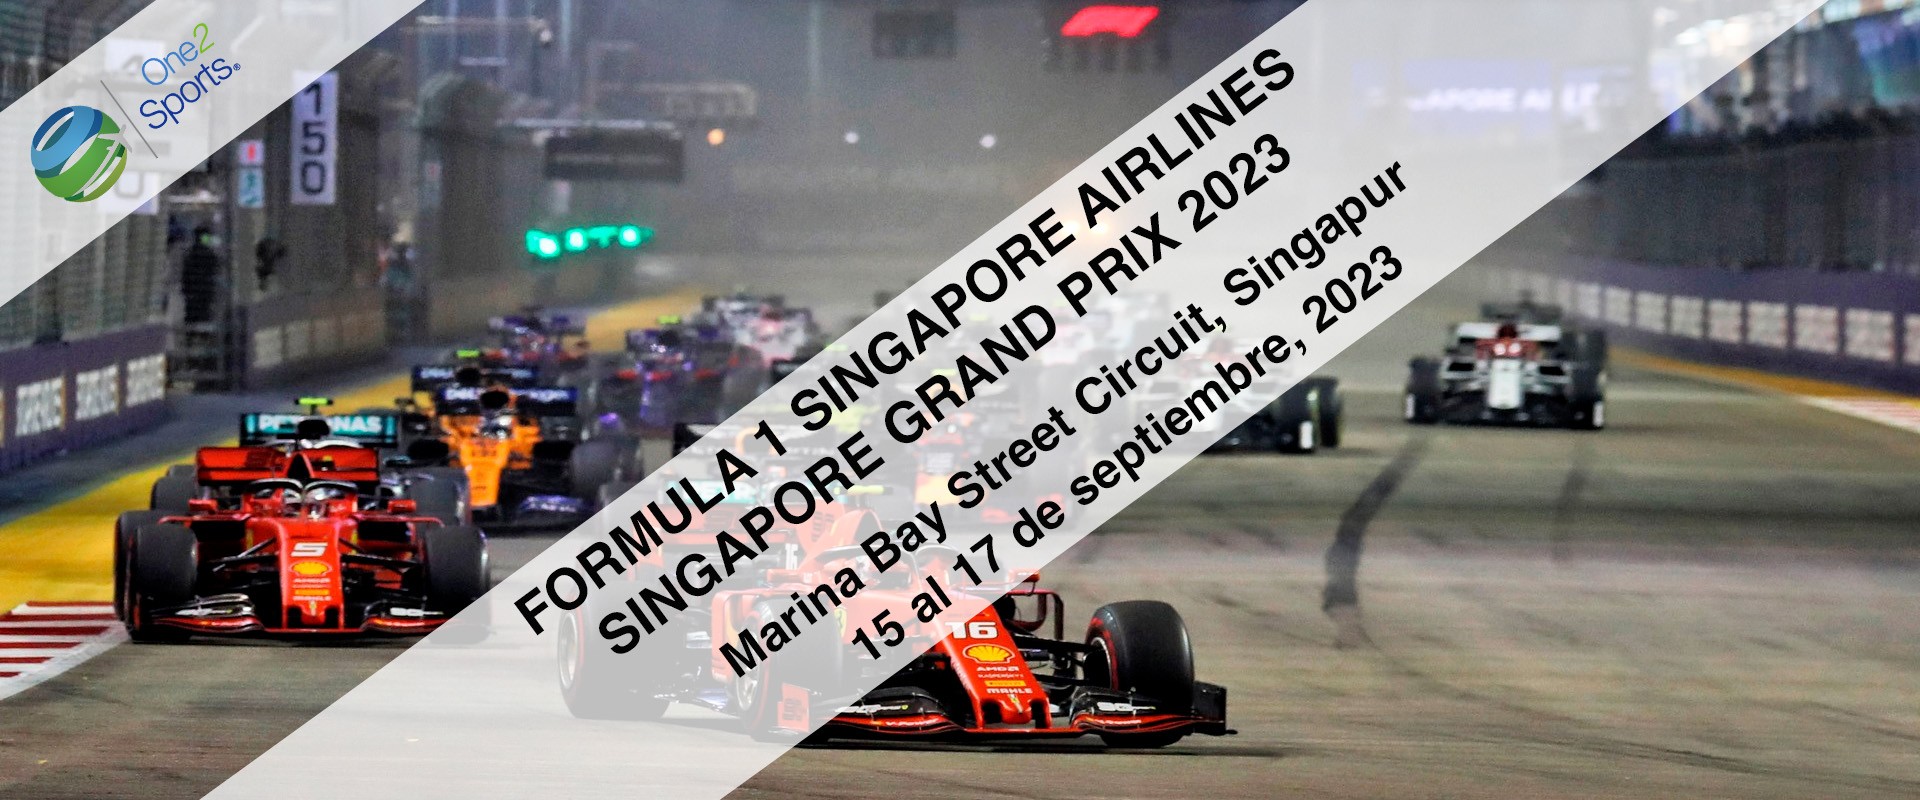 F1 Gran Premio Singapur